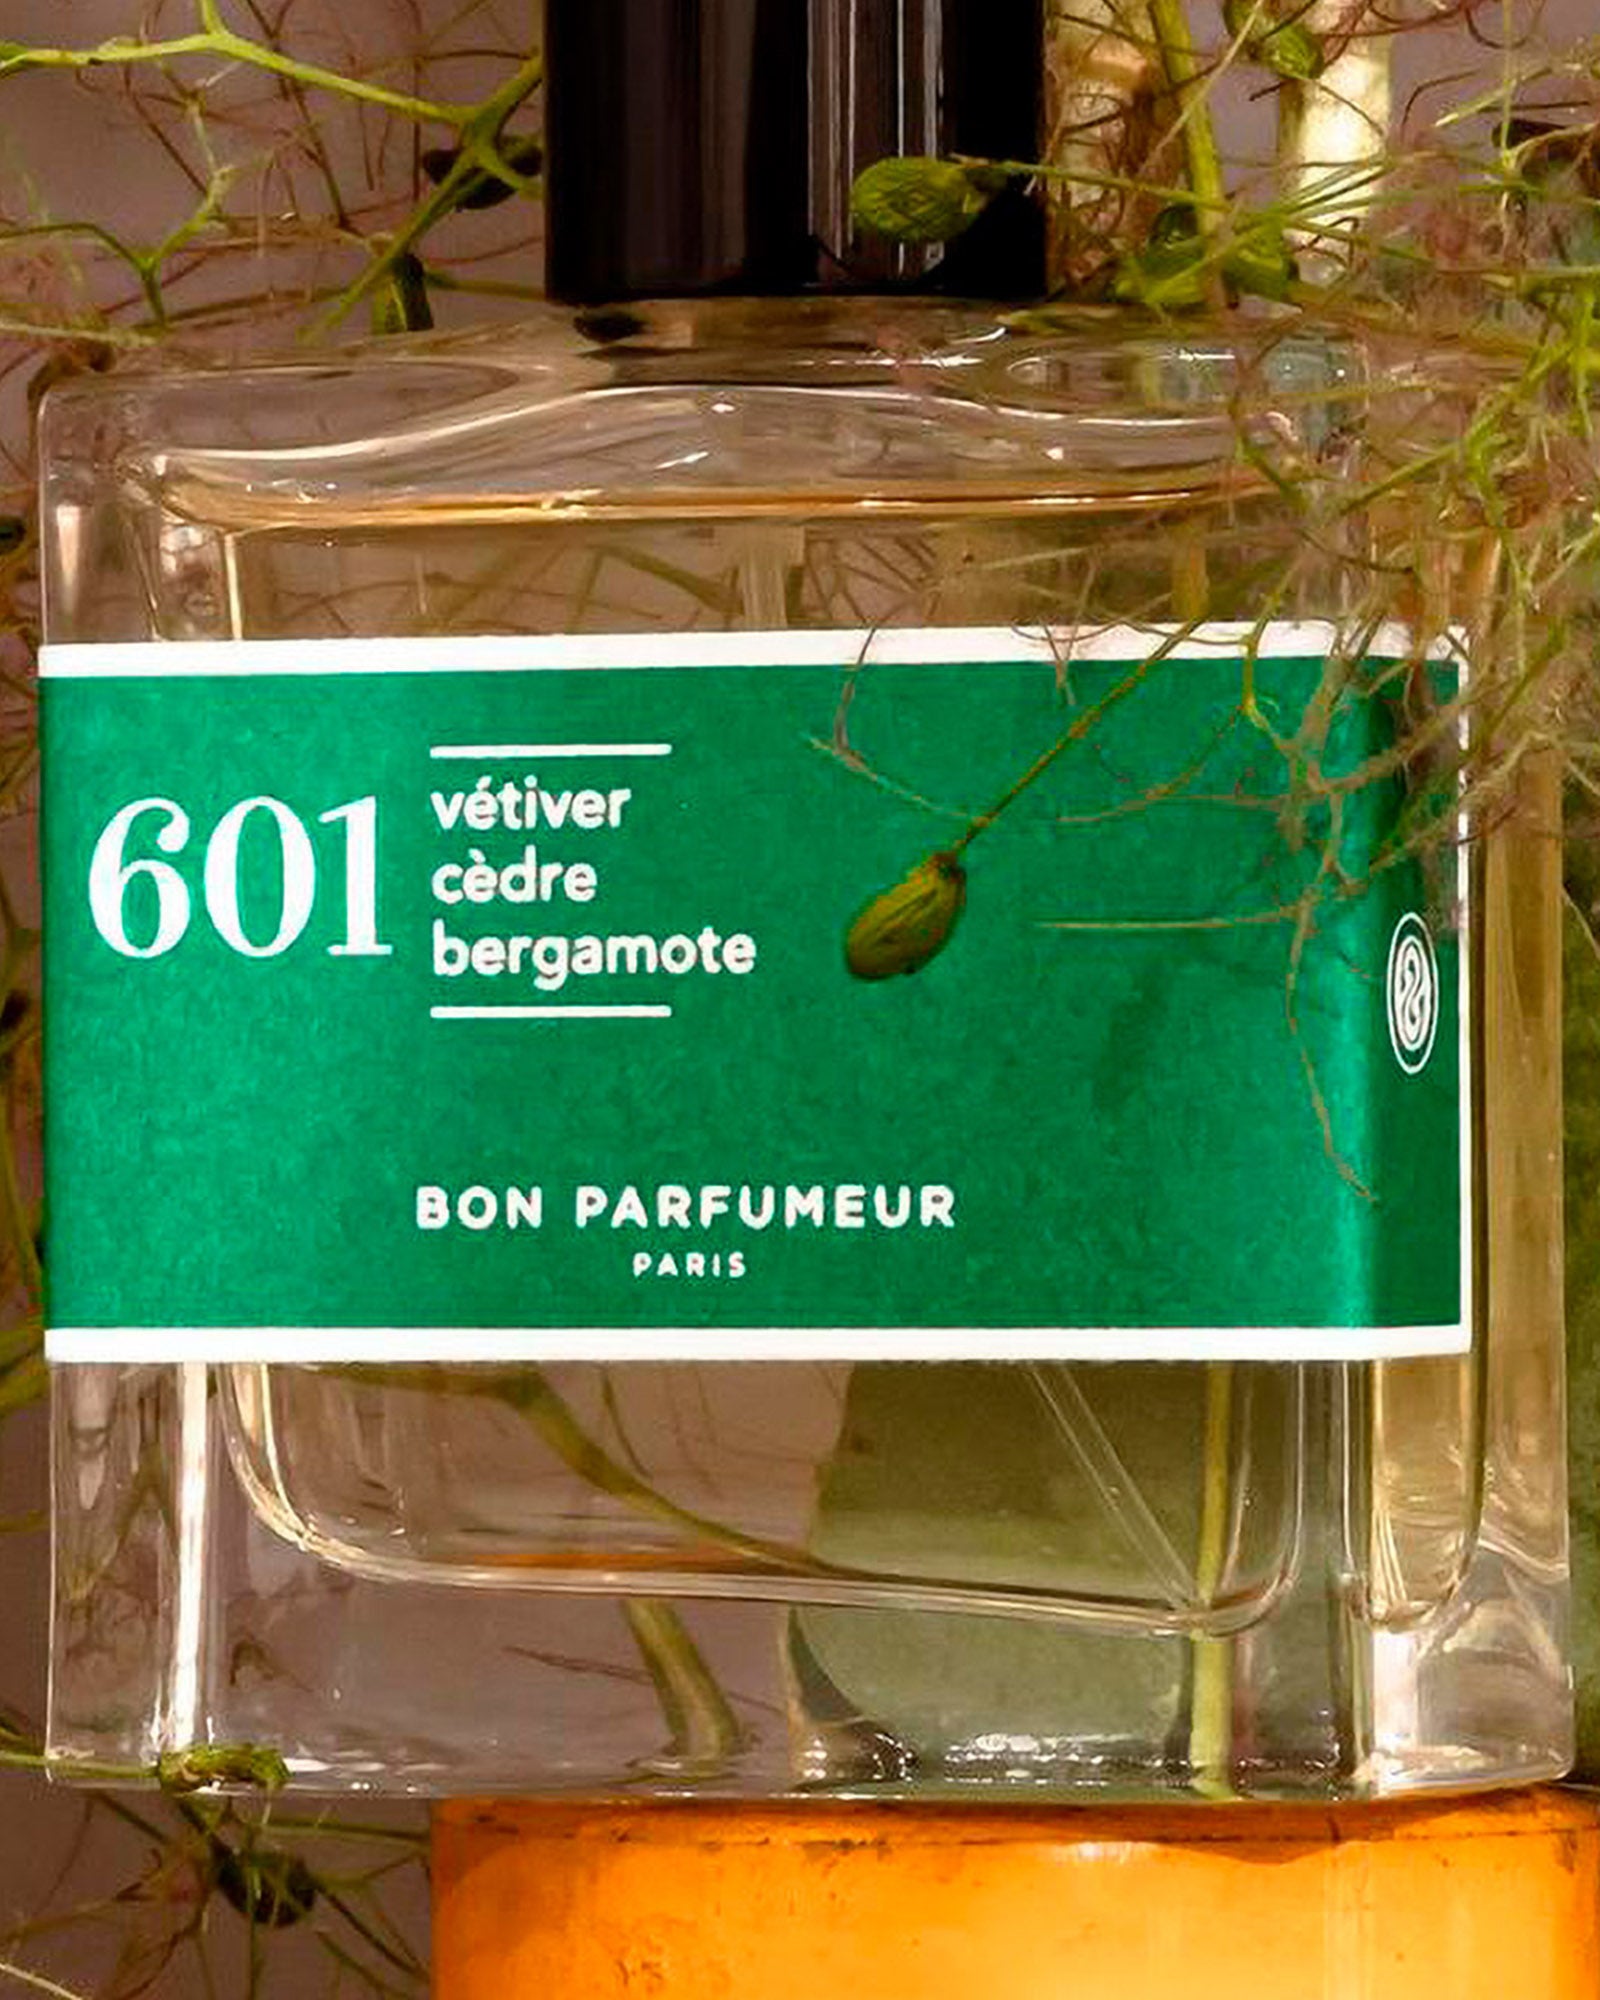 BON PARFUMEUR FRAGRANCE 601 WOODY